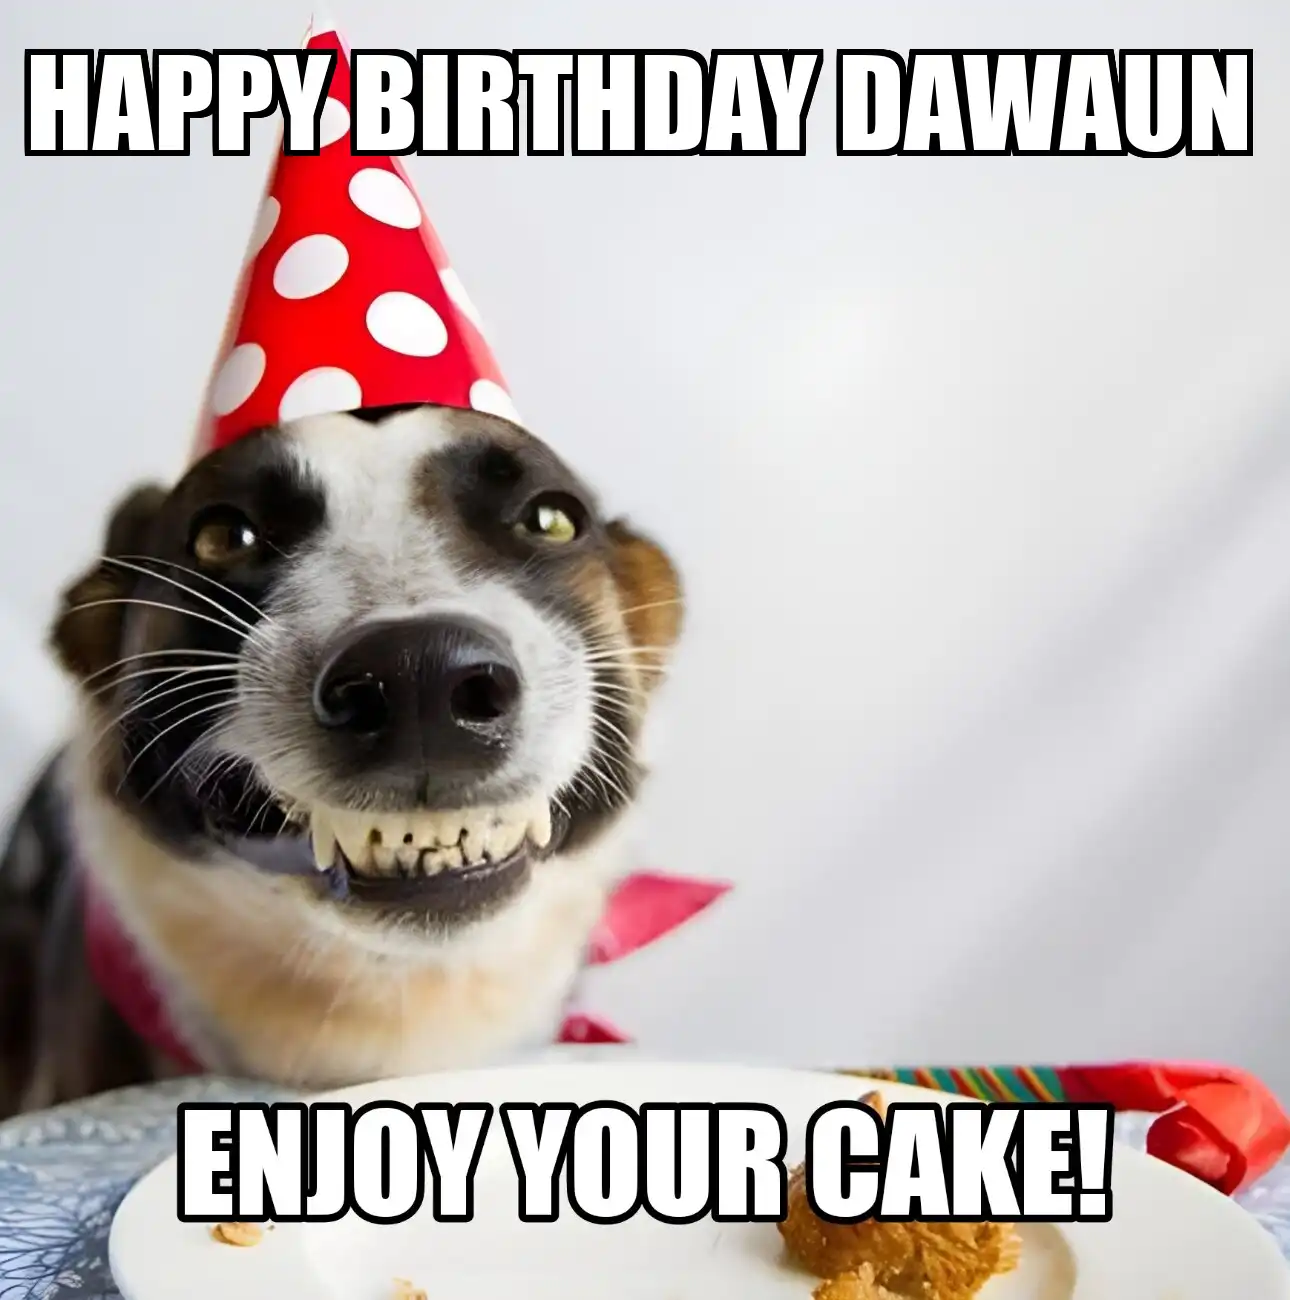 Happy Birthday Dawaun Enjoy Your Cake Dog Meme